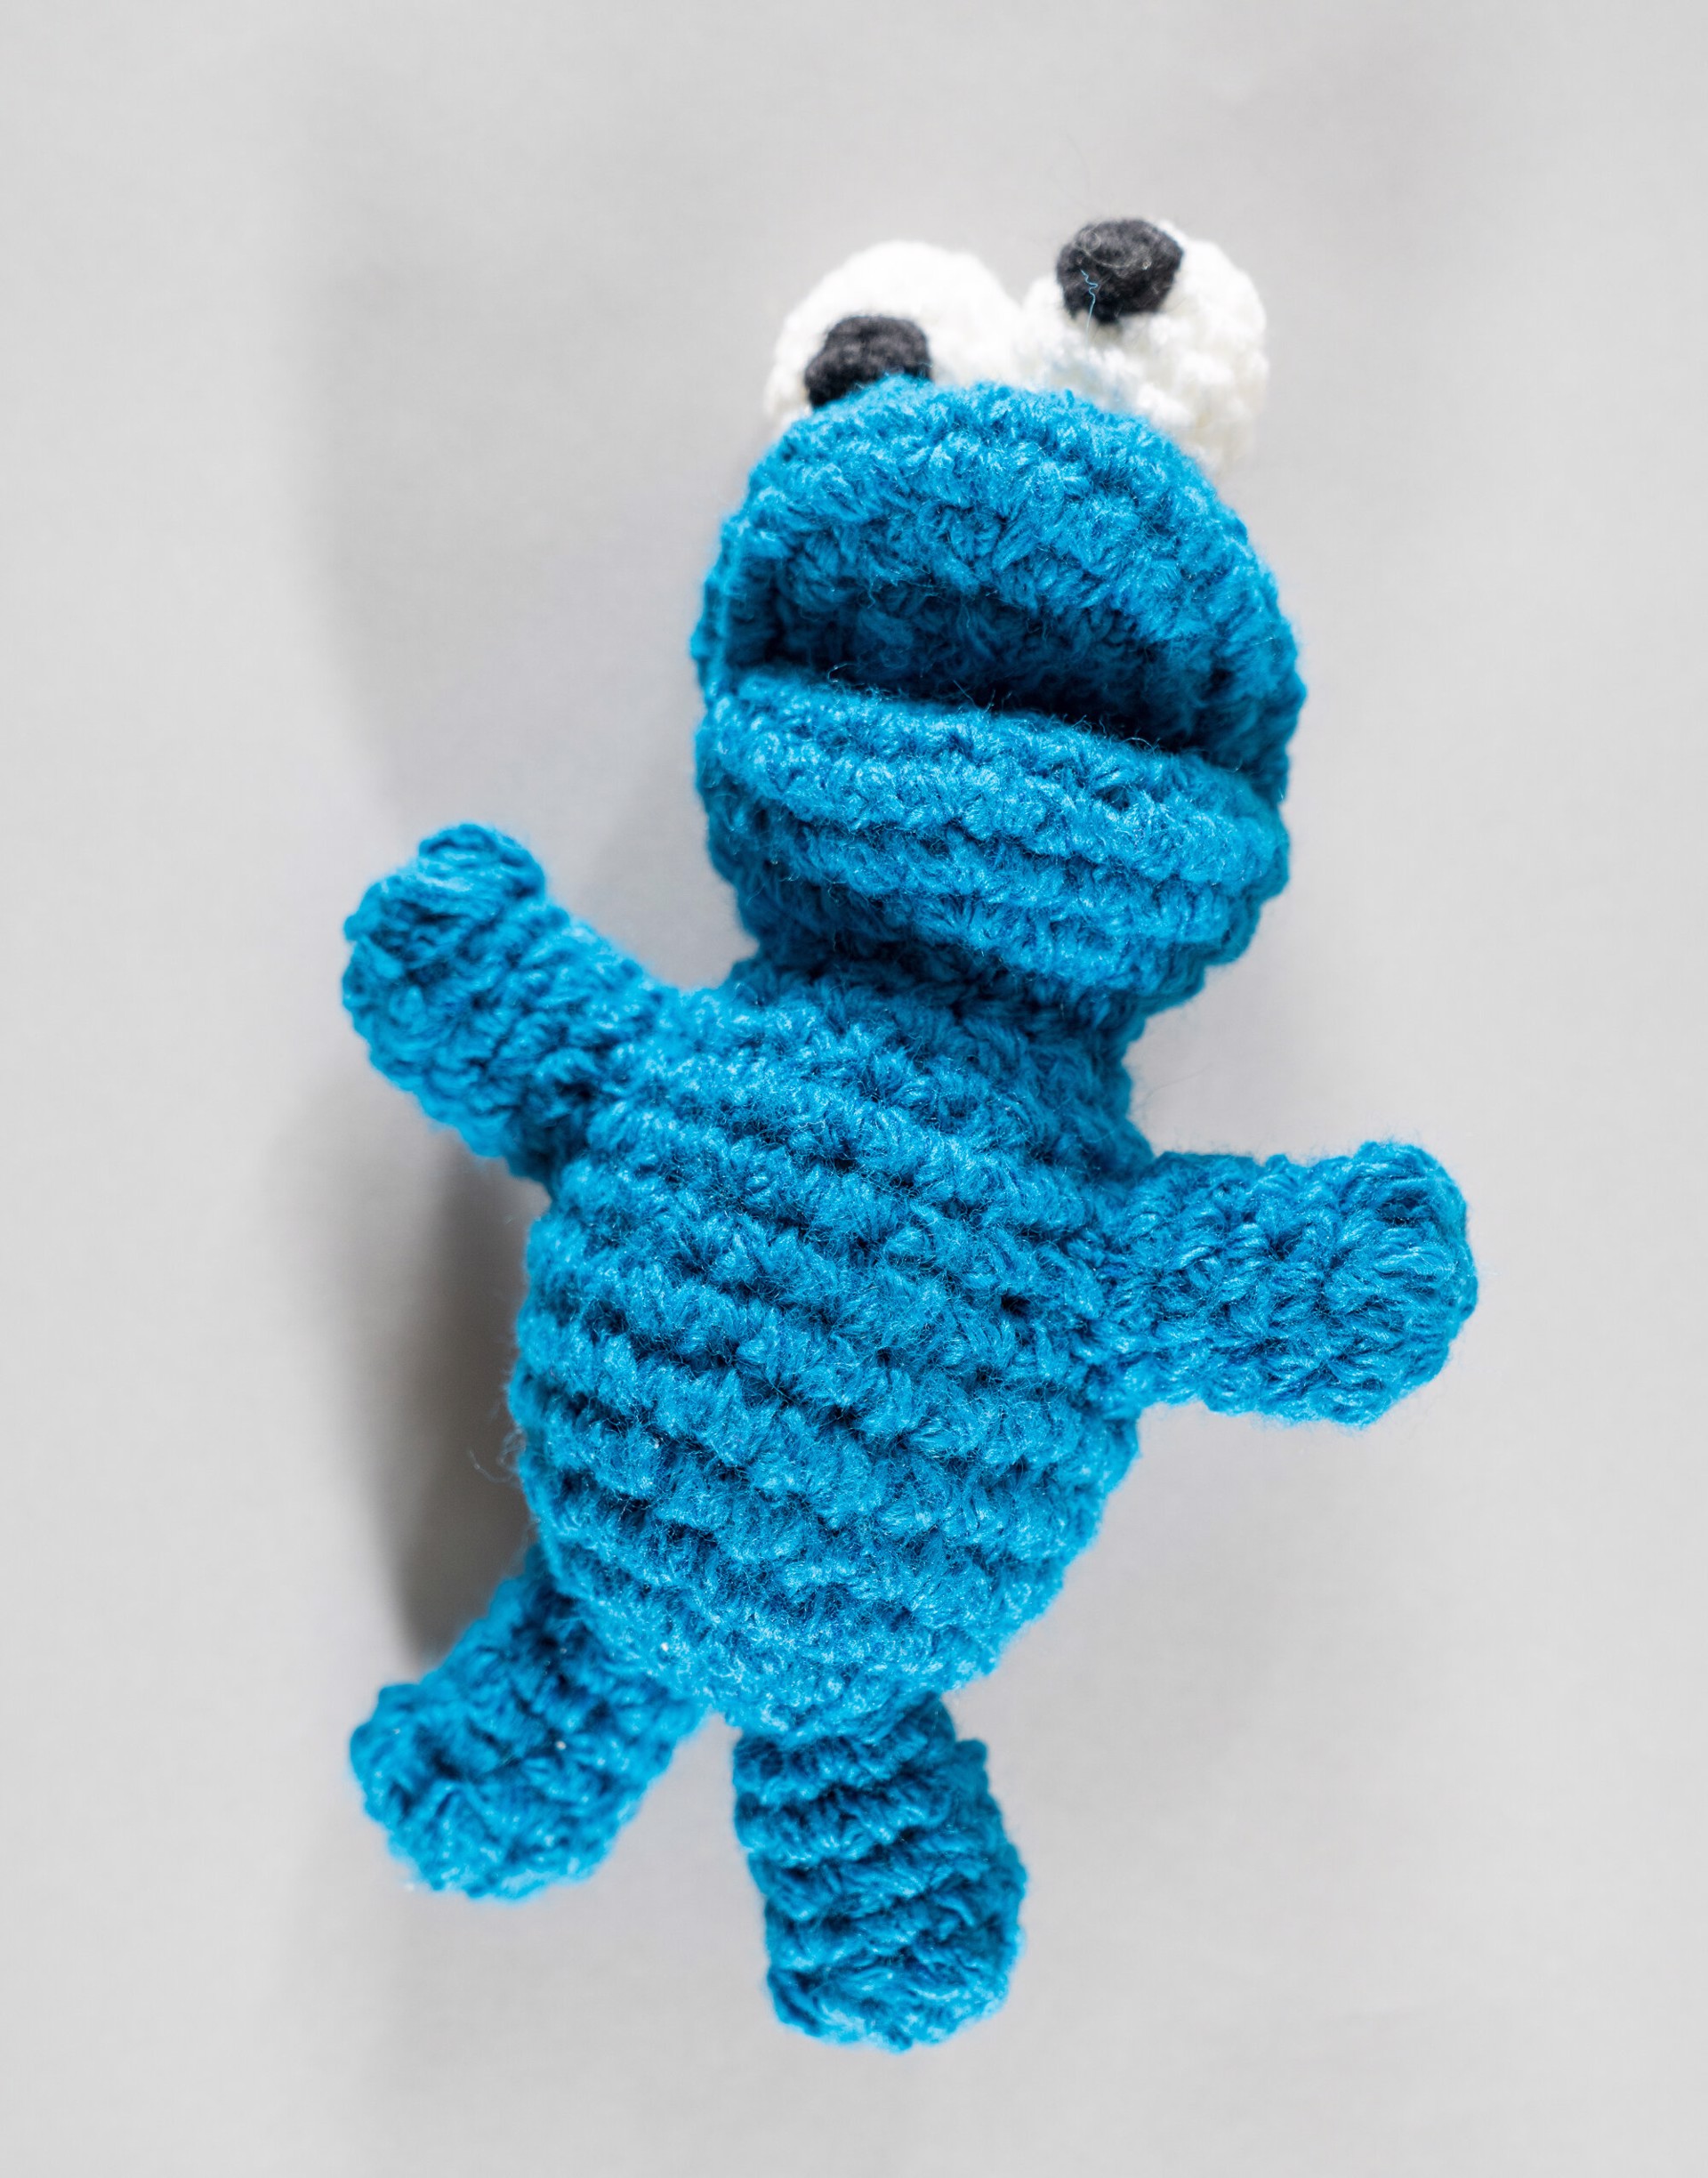 Cookie Monster crochet by Anthony Joseph Tupper